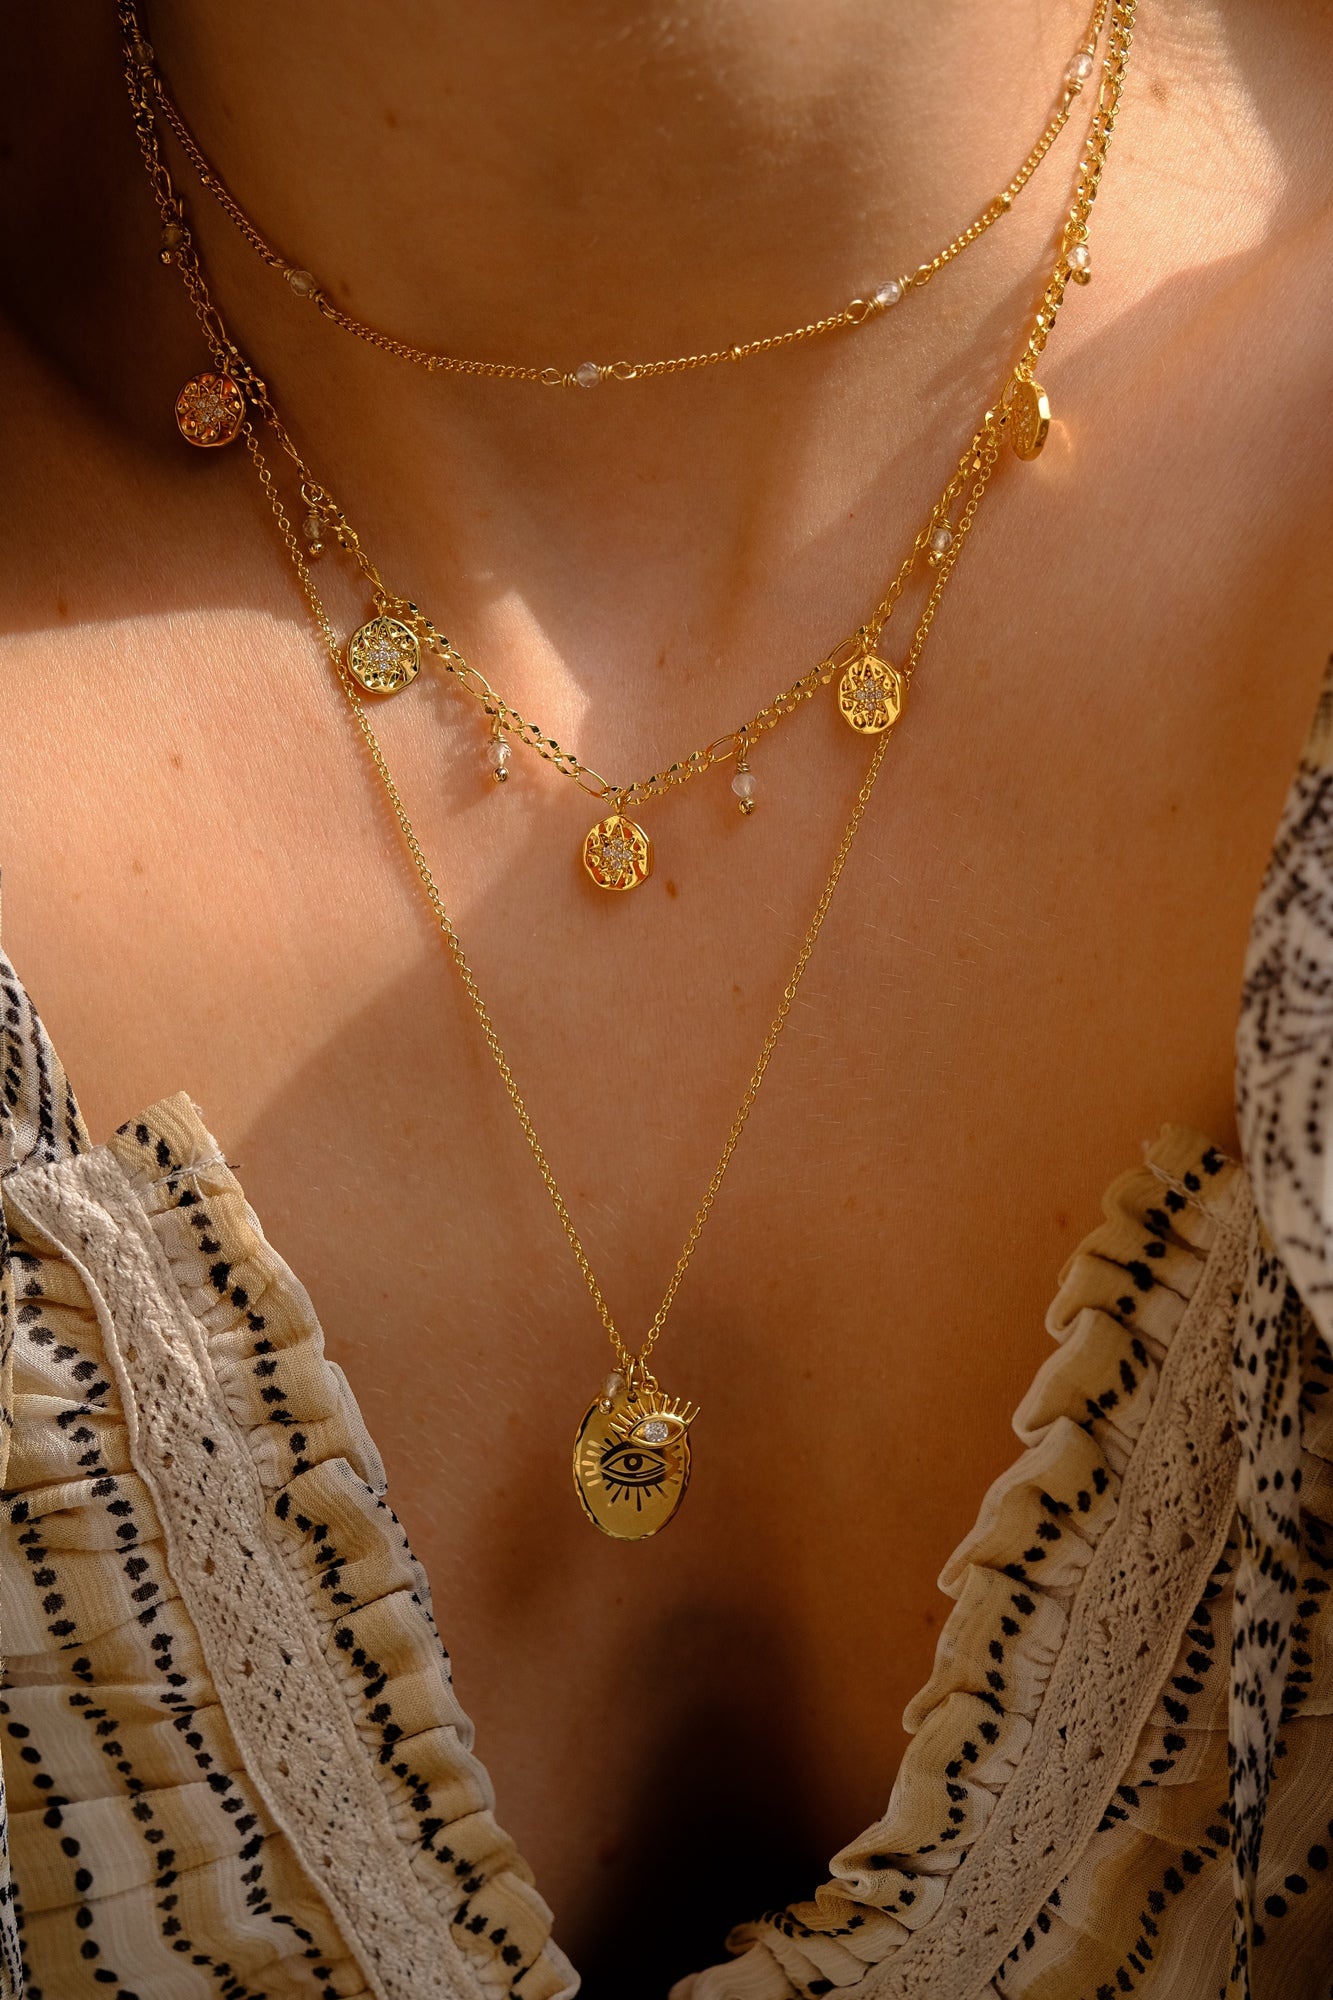 “Freya” necklace